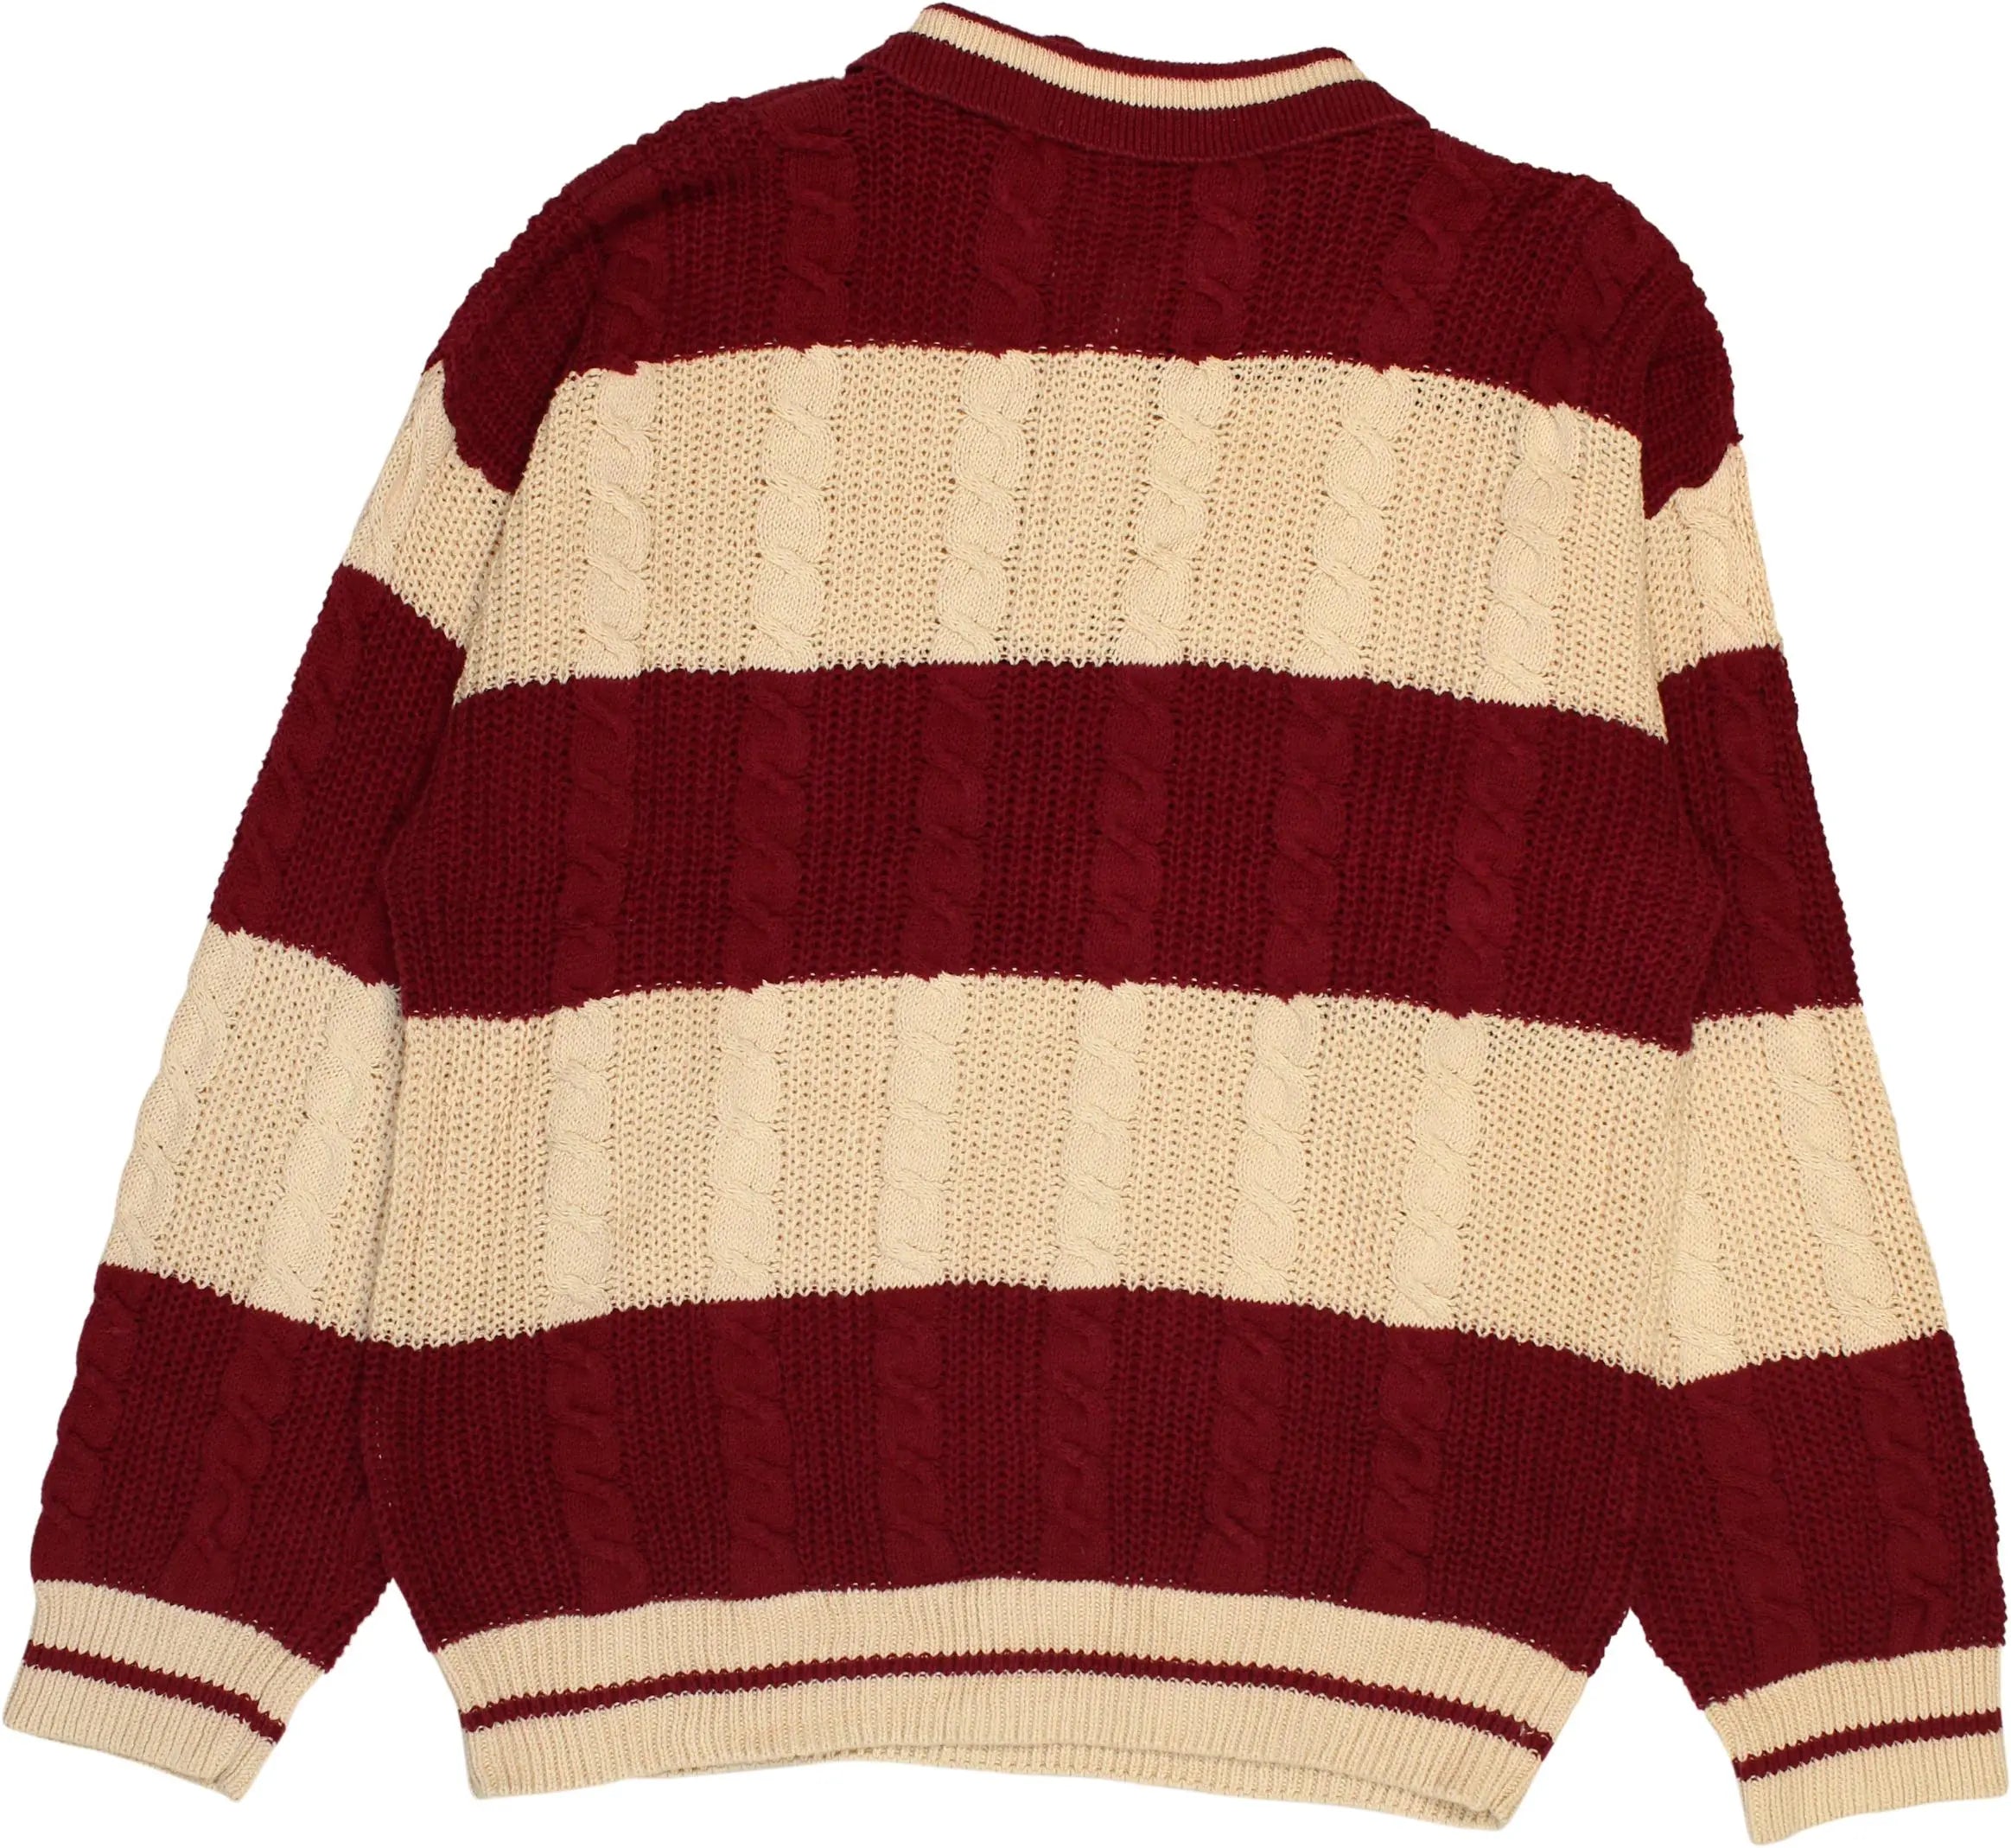 Martomod - Striped Jumper- ThriftTale.com - Vintage and second handclothing